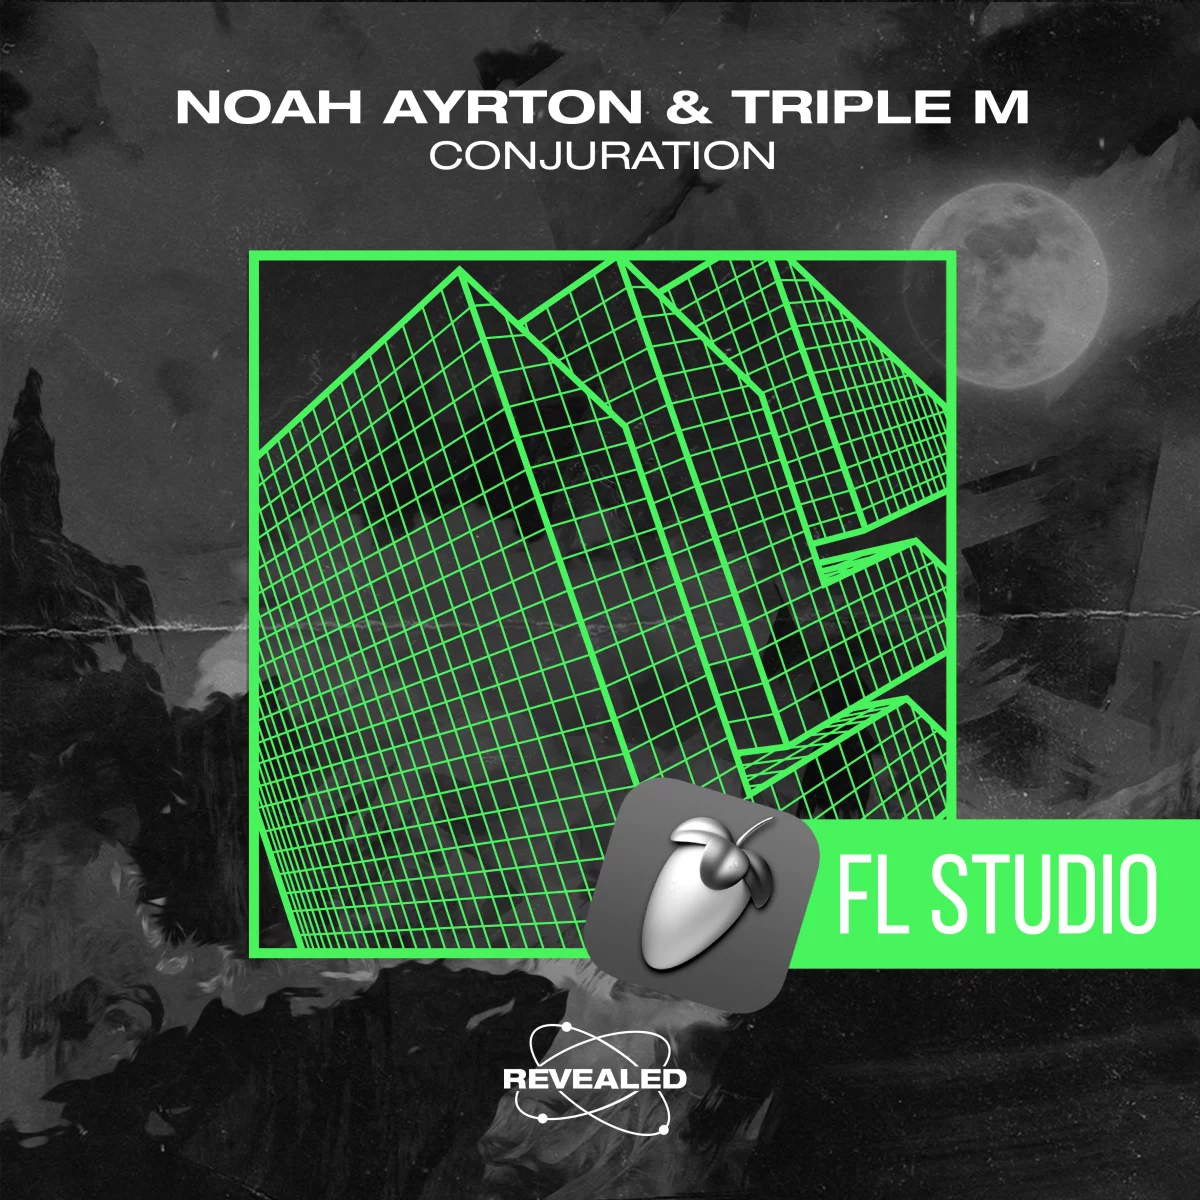 Conjuration (FL Studio Project) - Noah Ayrton⁠ & Triple M⁠ 